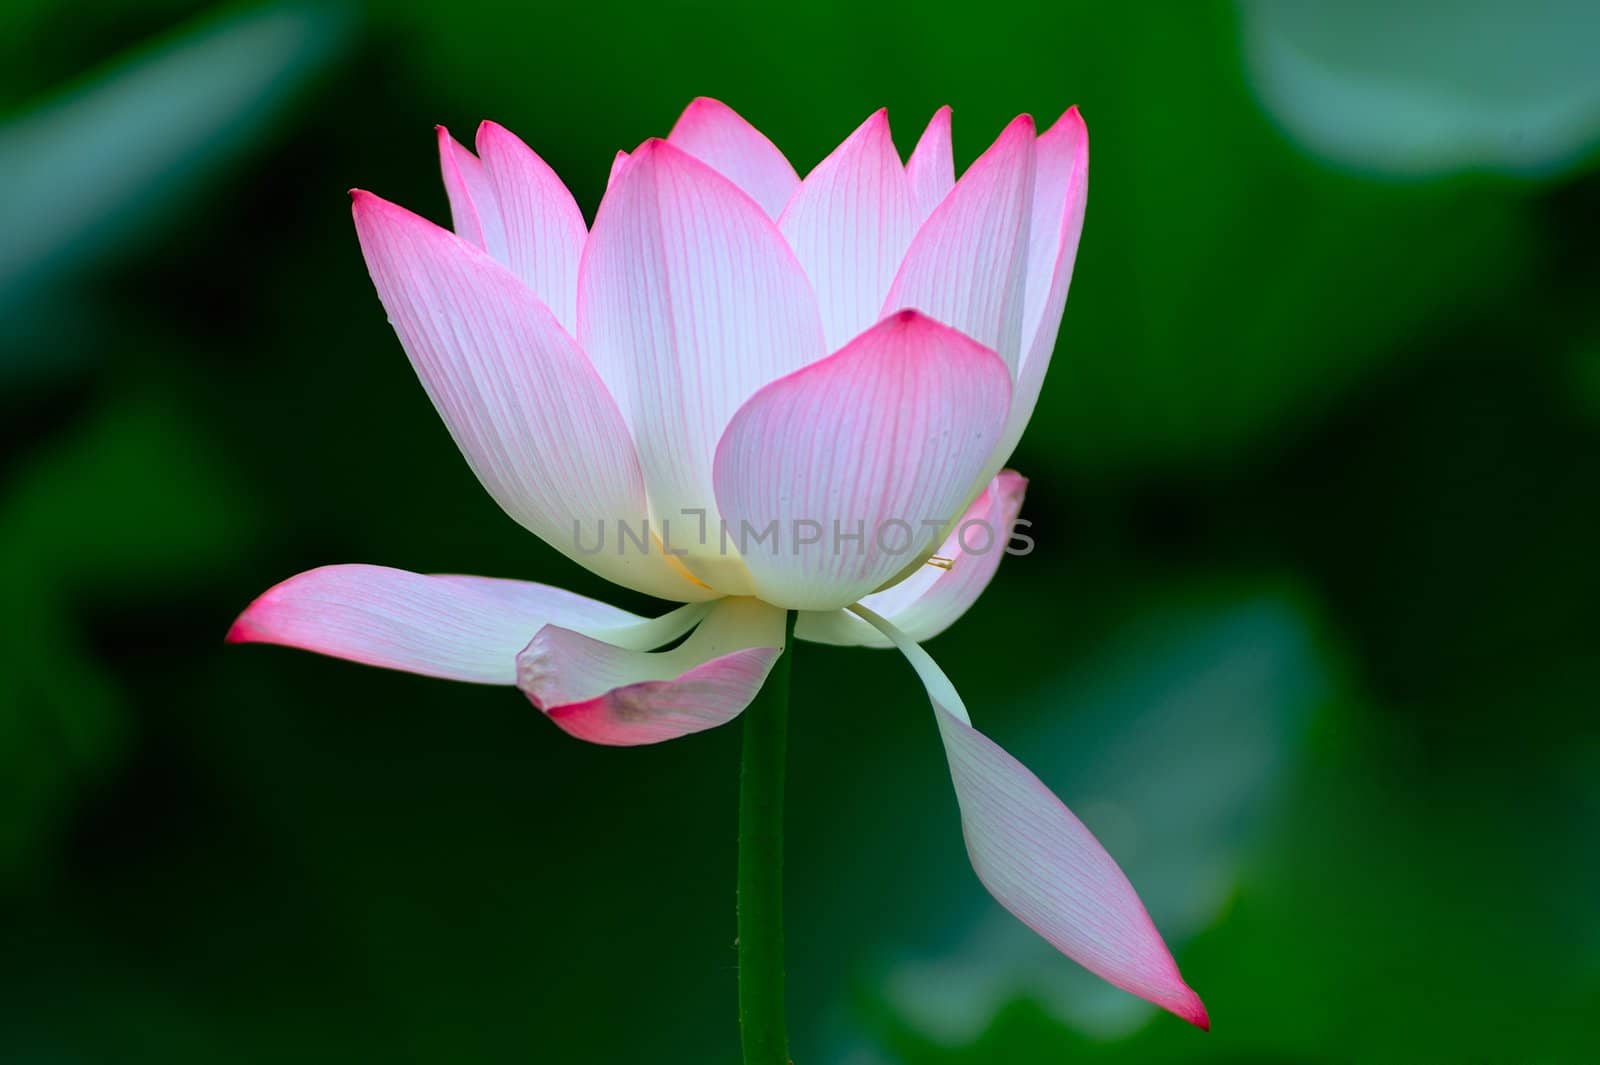 Lotus flower by raywoo